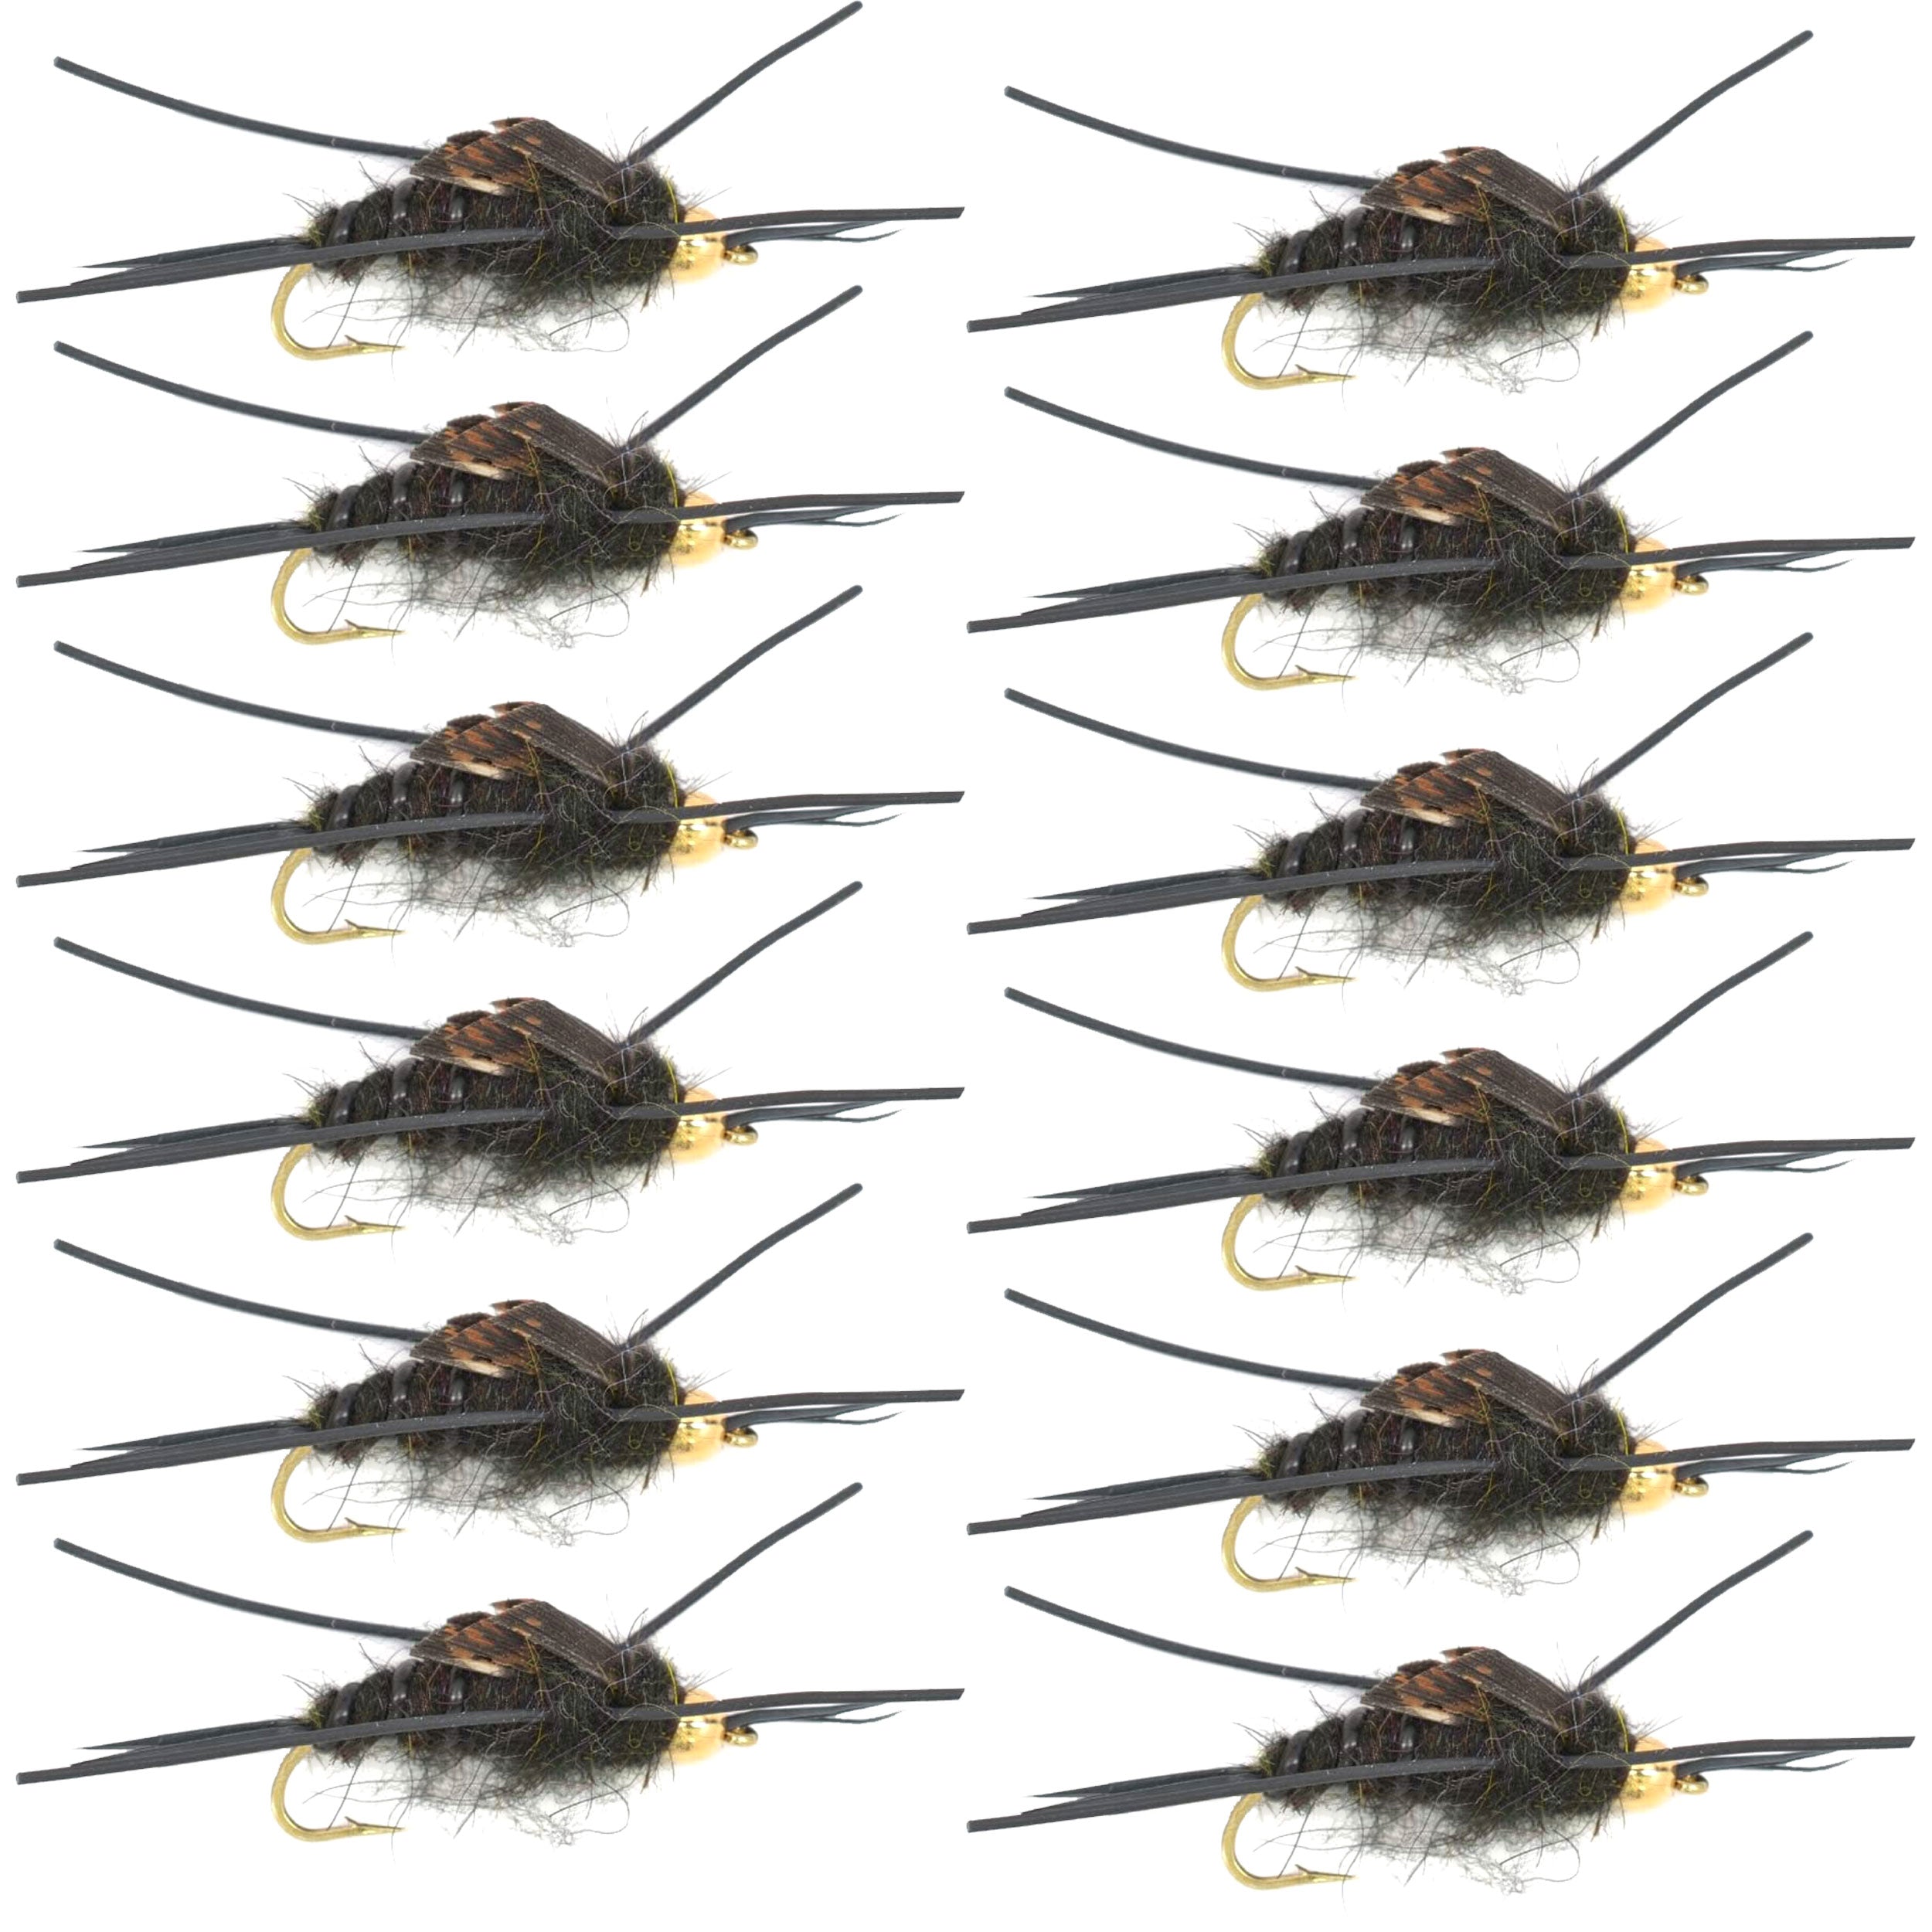 60 Hand Tied Fly Fishing Flies Kit, Assortment of Wet Flies, Dry Flies,  Nymphs